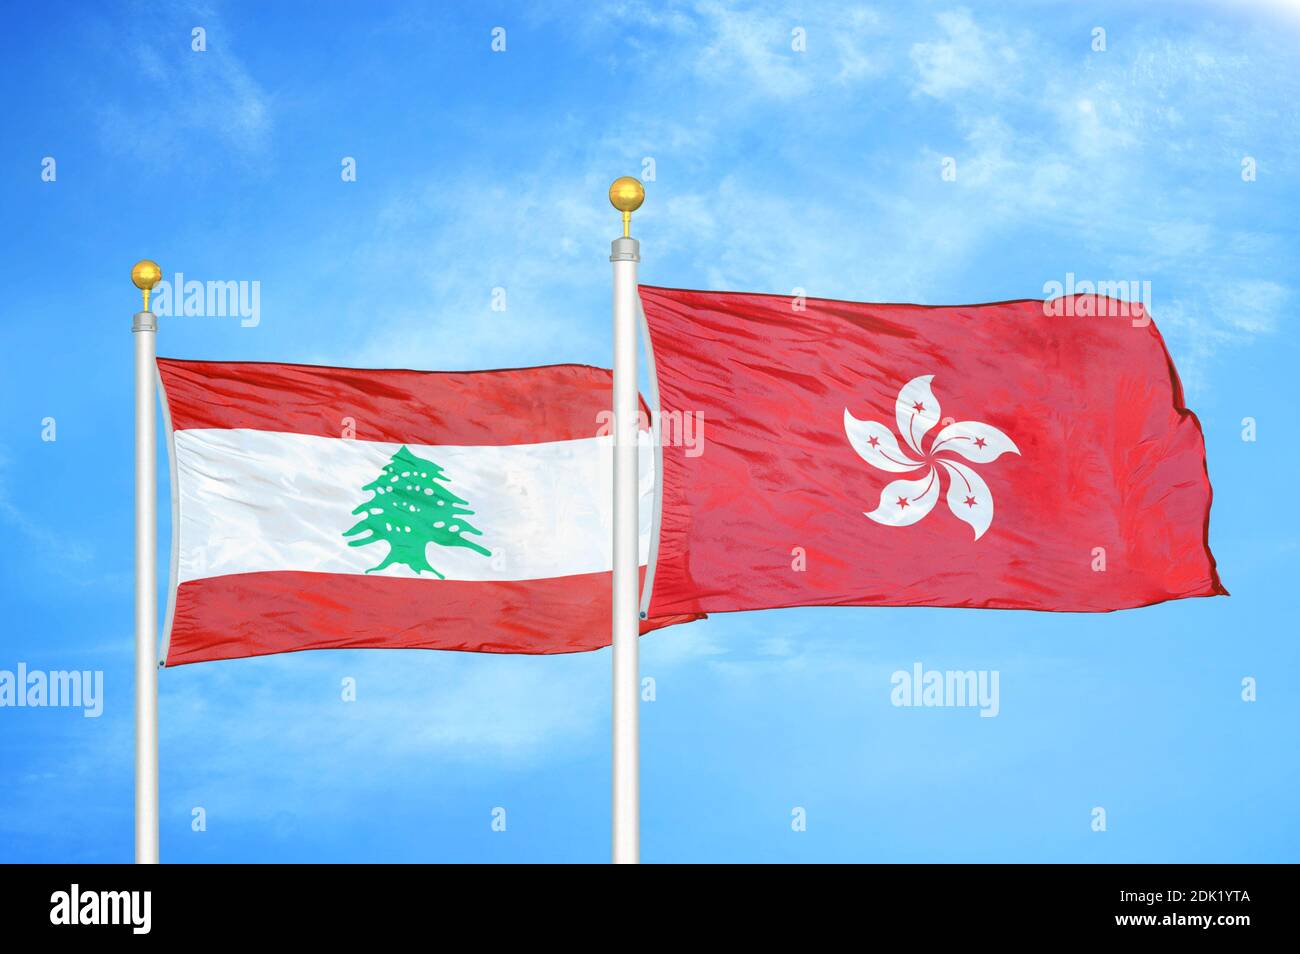 Libanon Hong Kong Flagge Stockfotos und -bilder Kaufen - Alamy